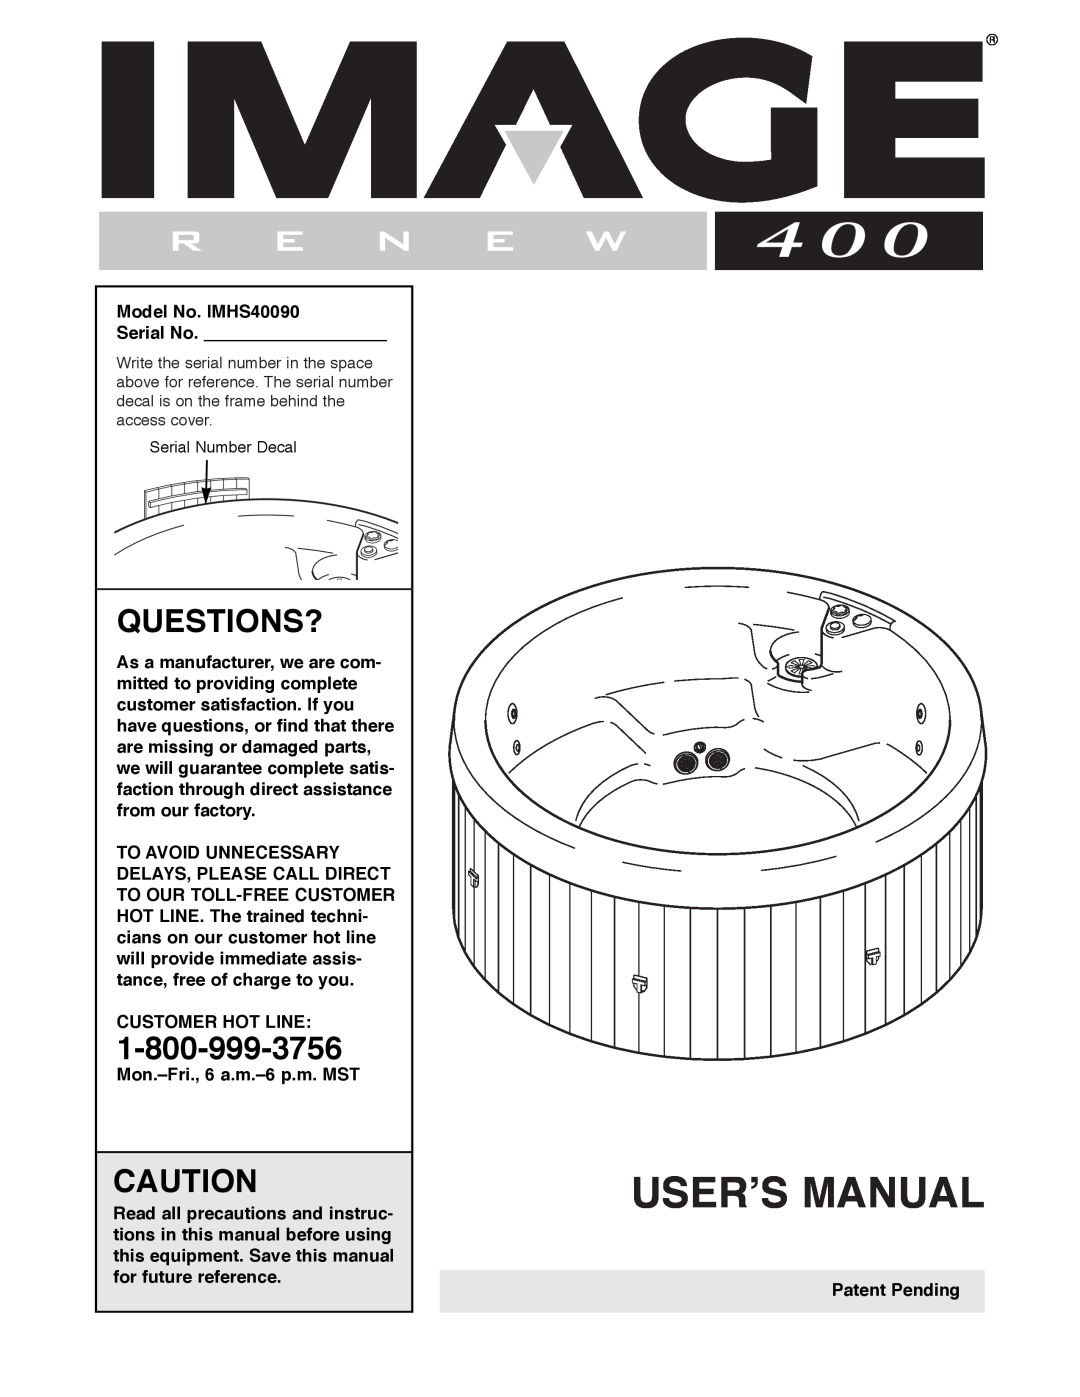 Image IMHS40090 manual Questions?, Userõs Manual 